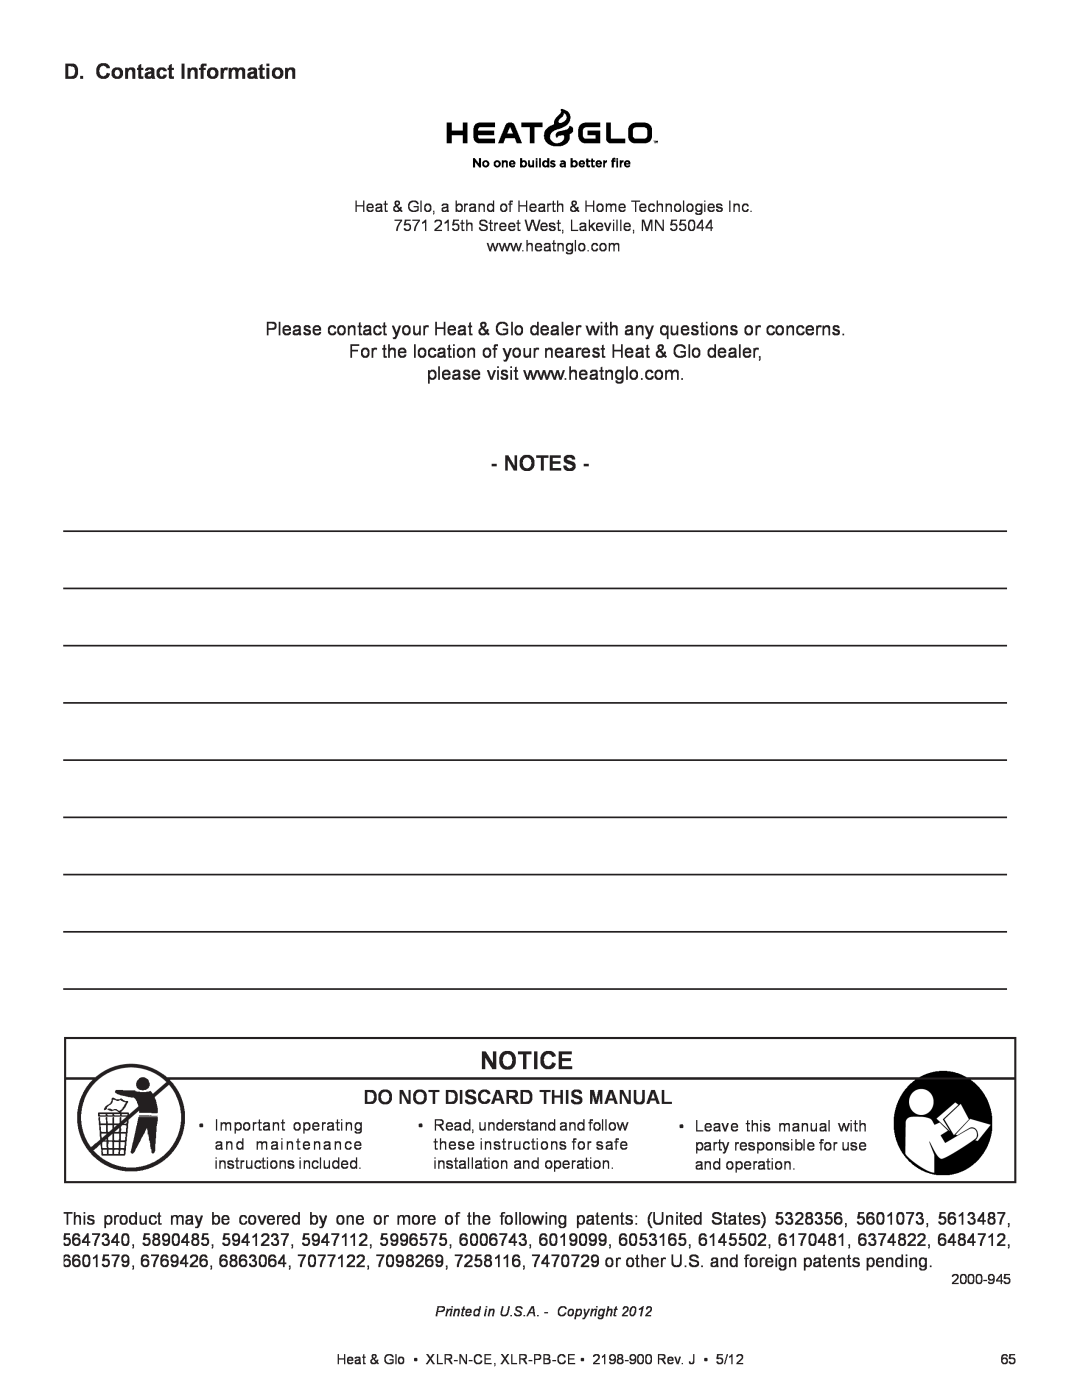 Heat & Glo LifeStyle XLR-PB-CE, XLR-N-CE manual D. Contact Information, Notice 